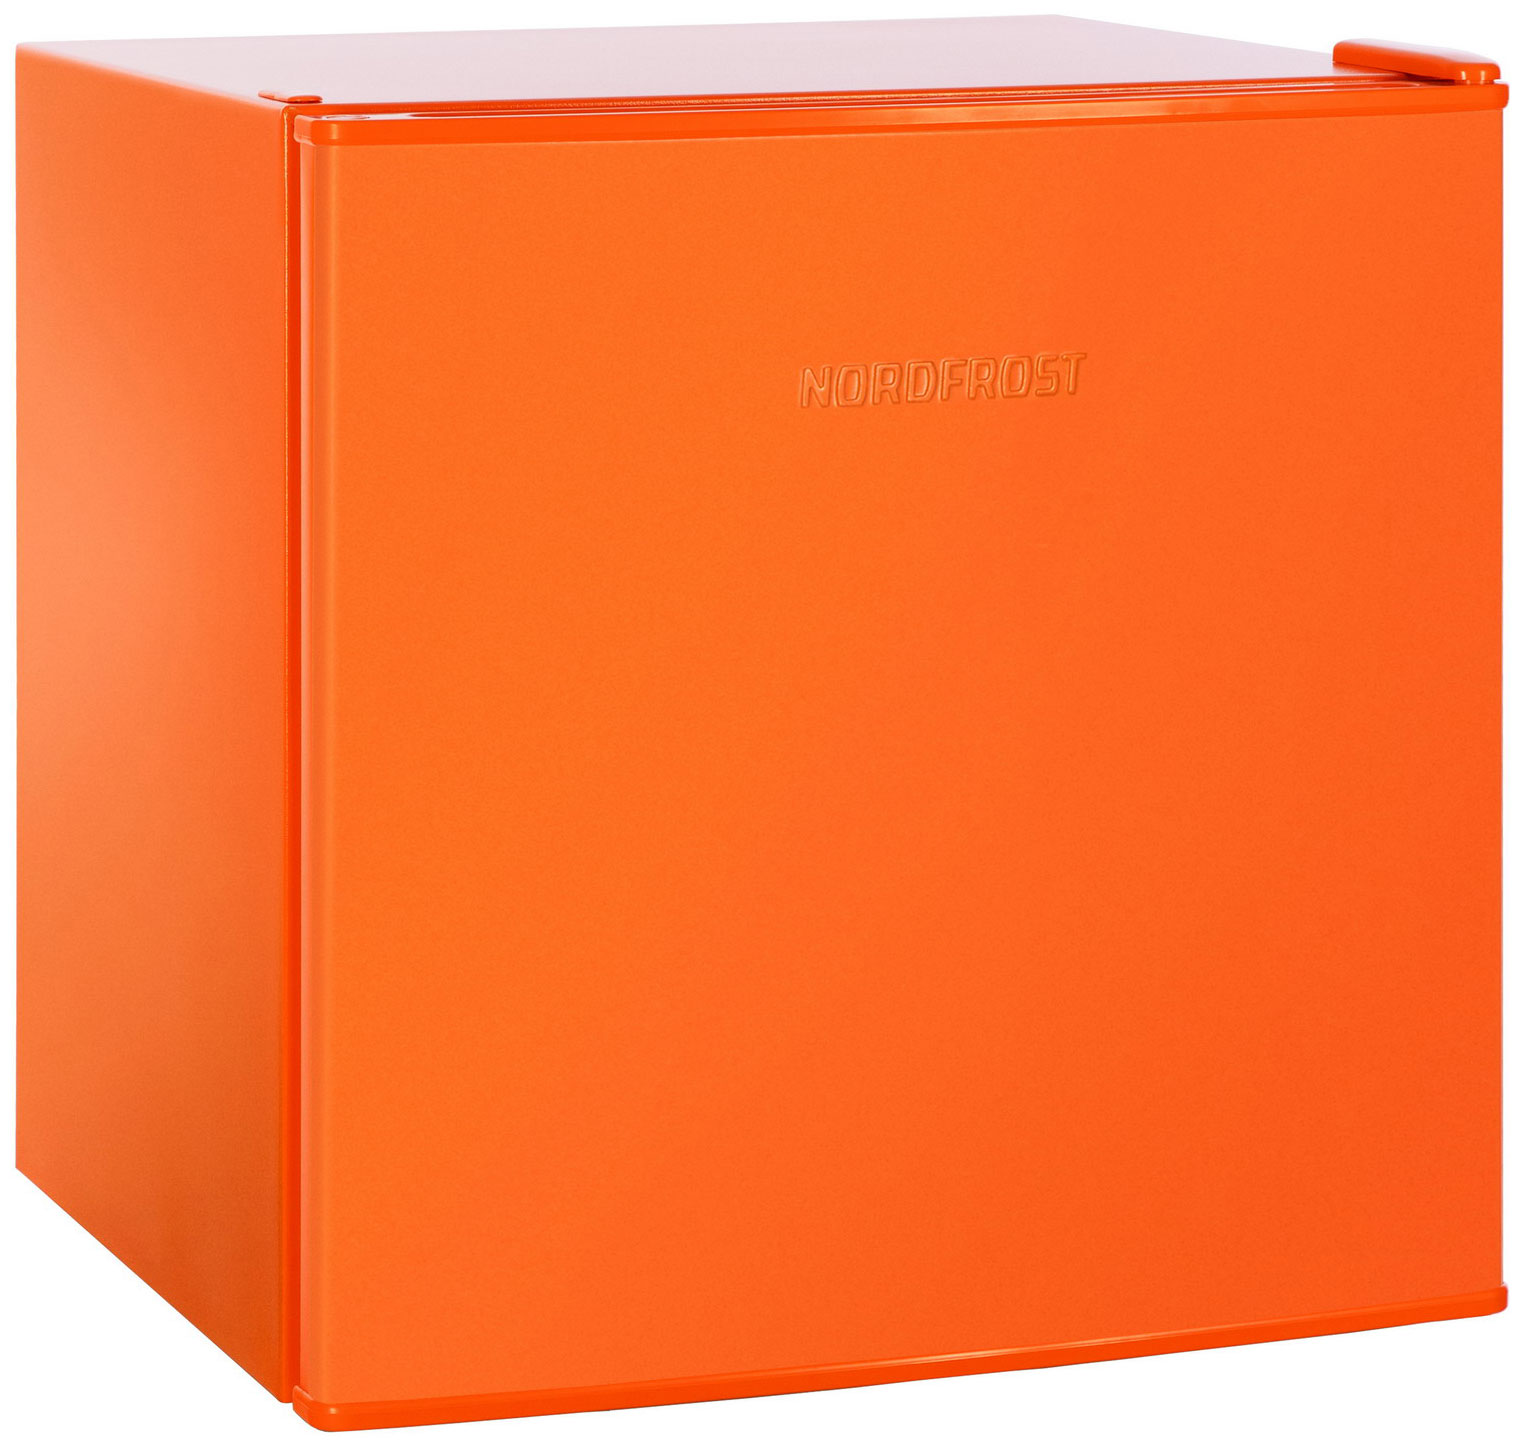 Холодильник NordFrost NR 402 оранжевый холодильник nordfrost nrb 161nf or оранжевый